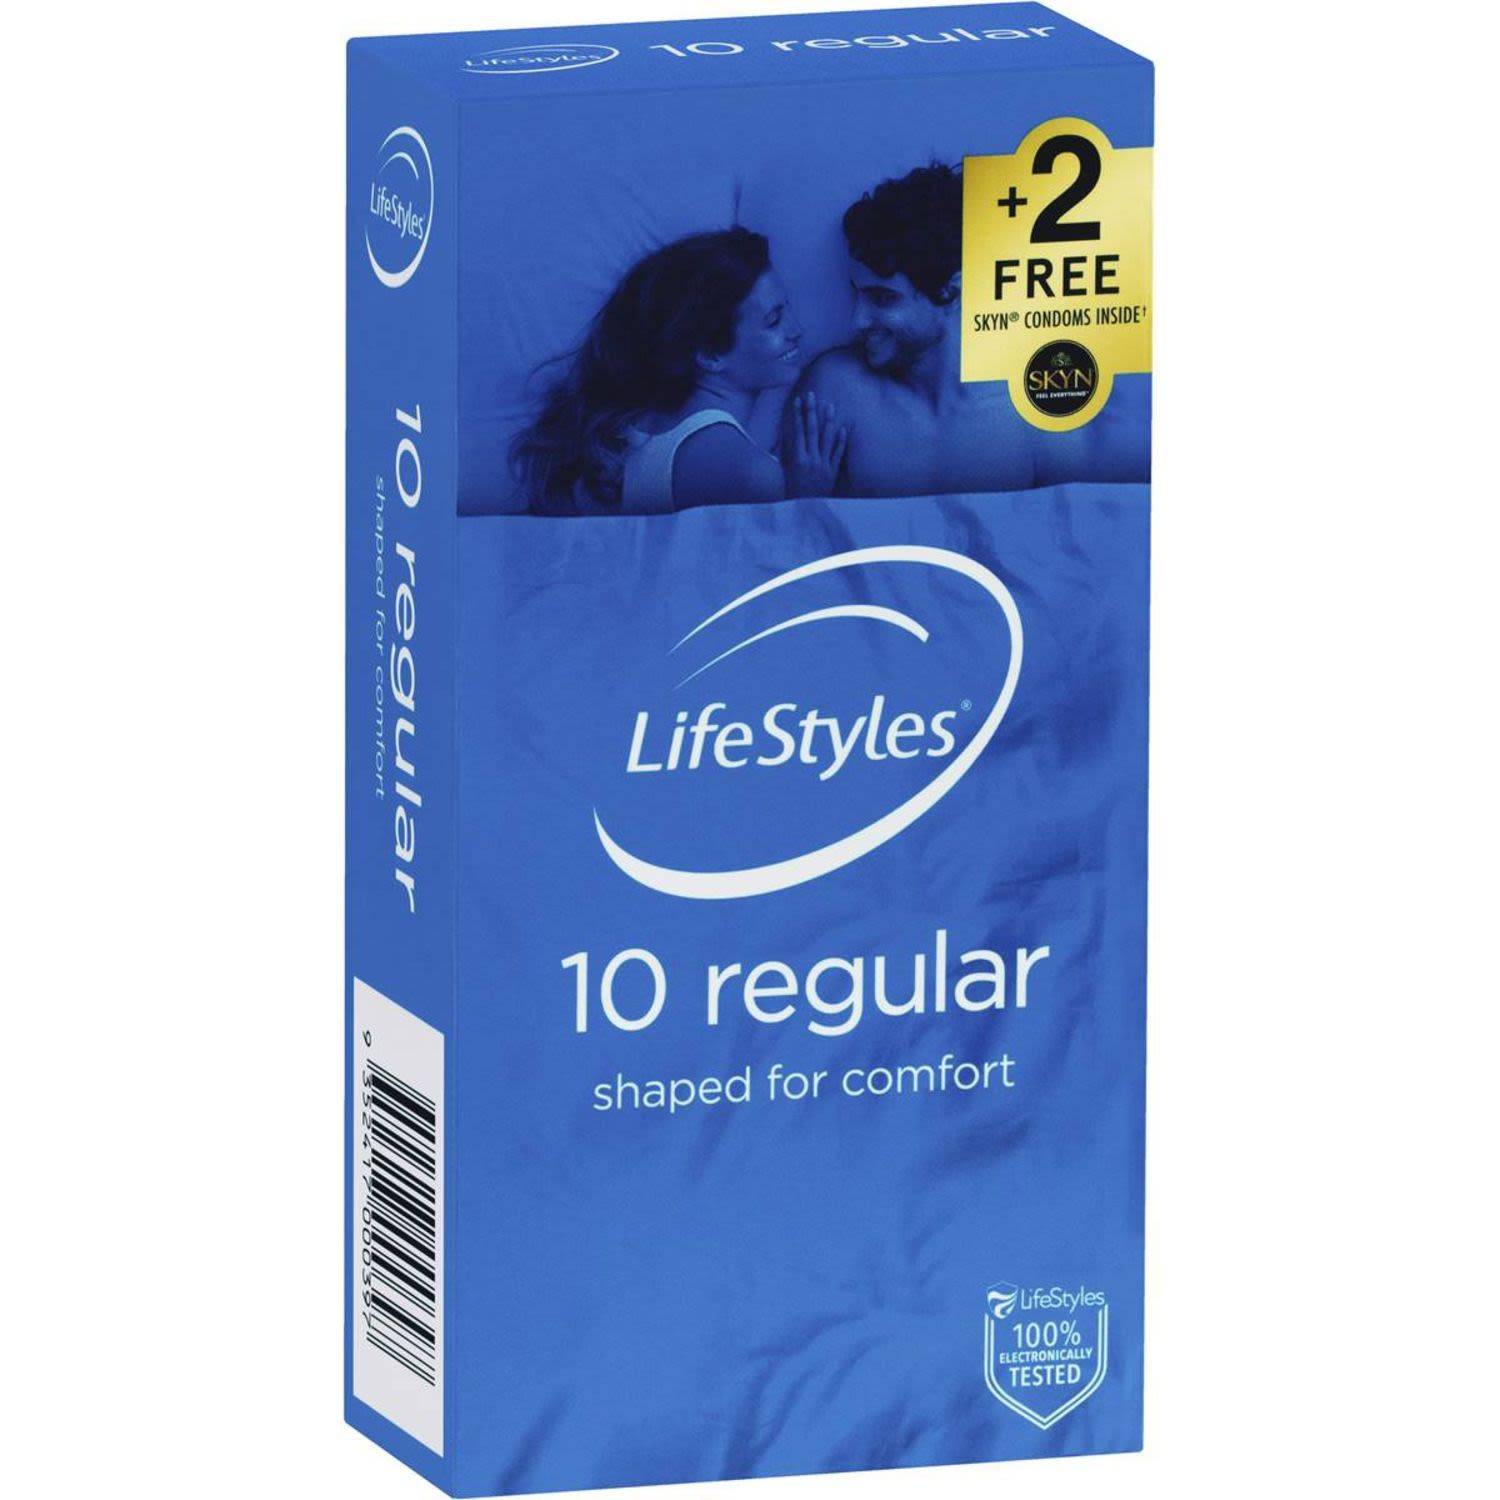 Lifestyles Condoms Regular, 10 Each